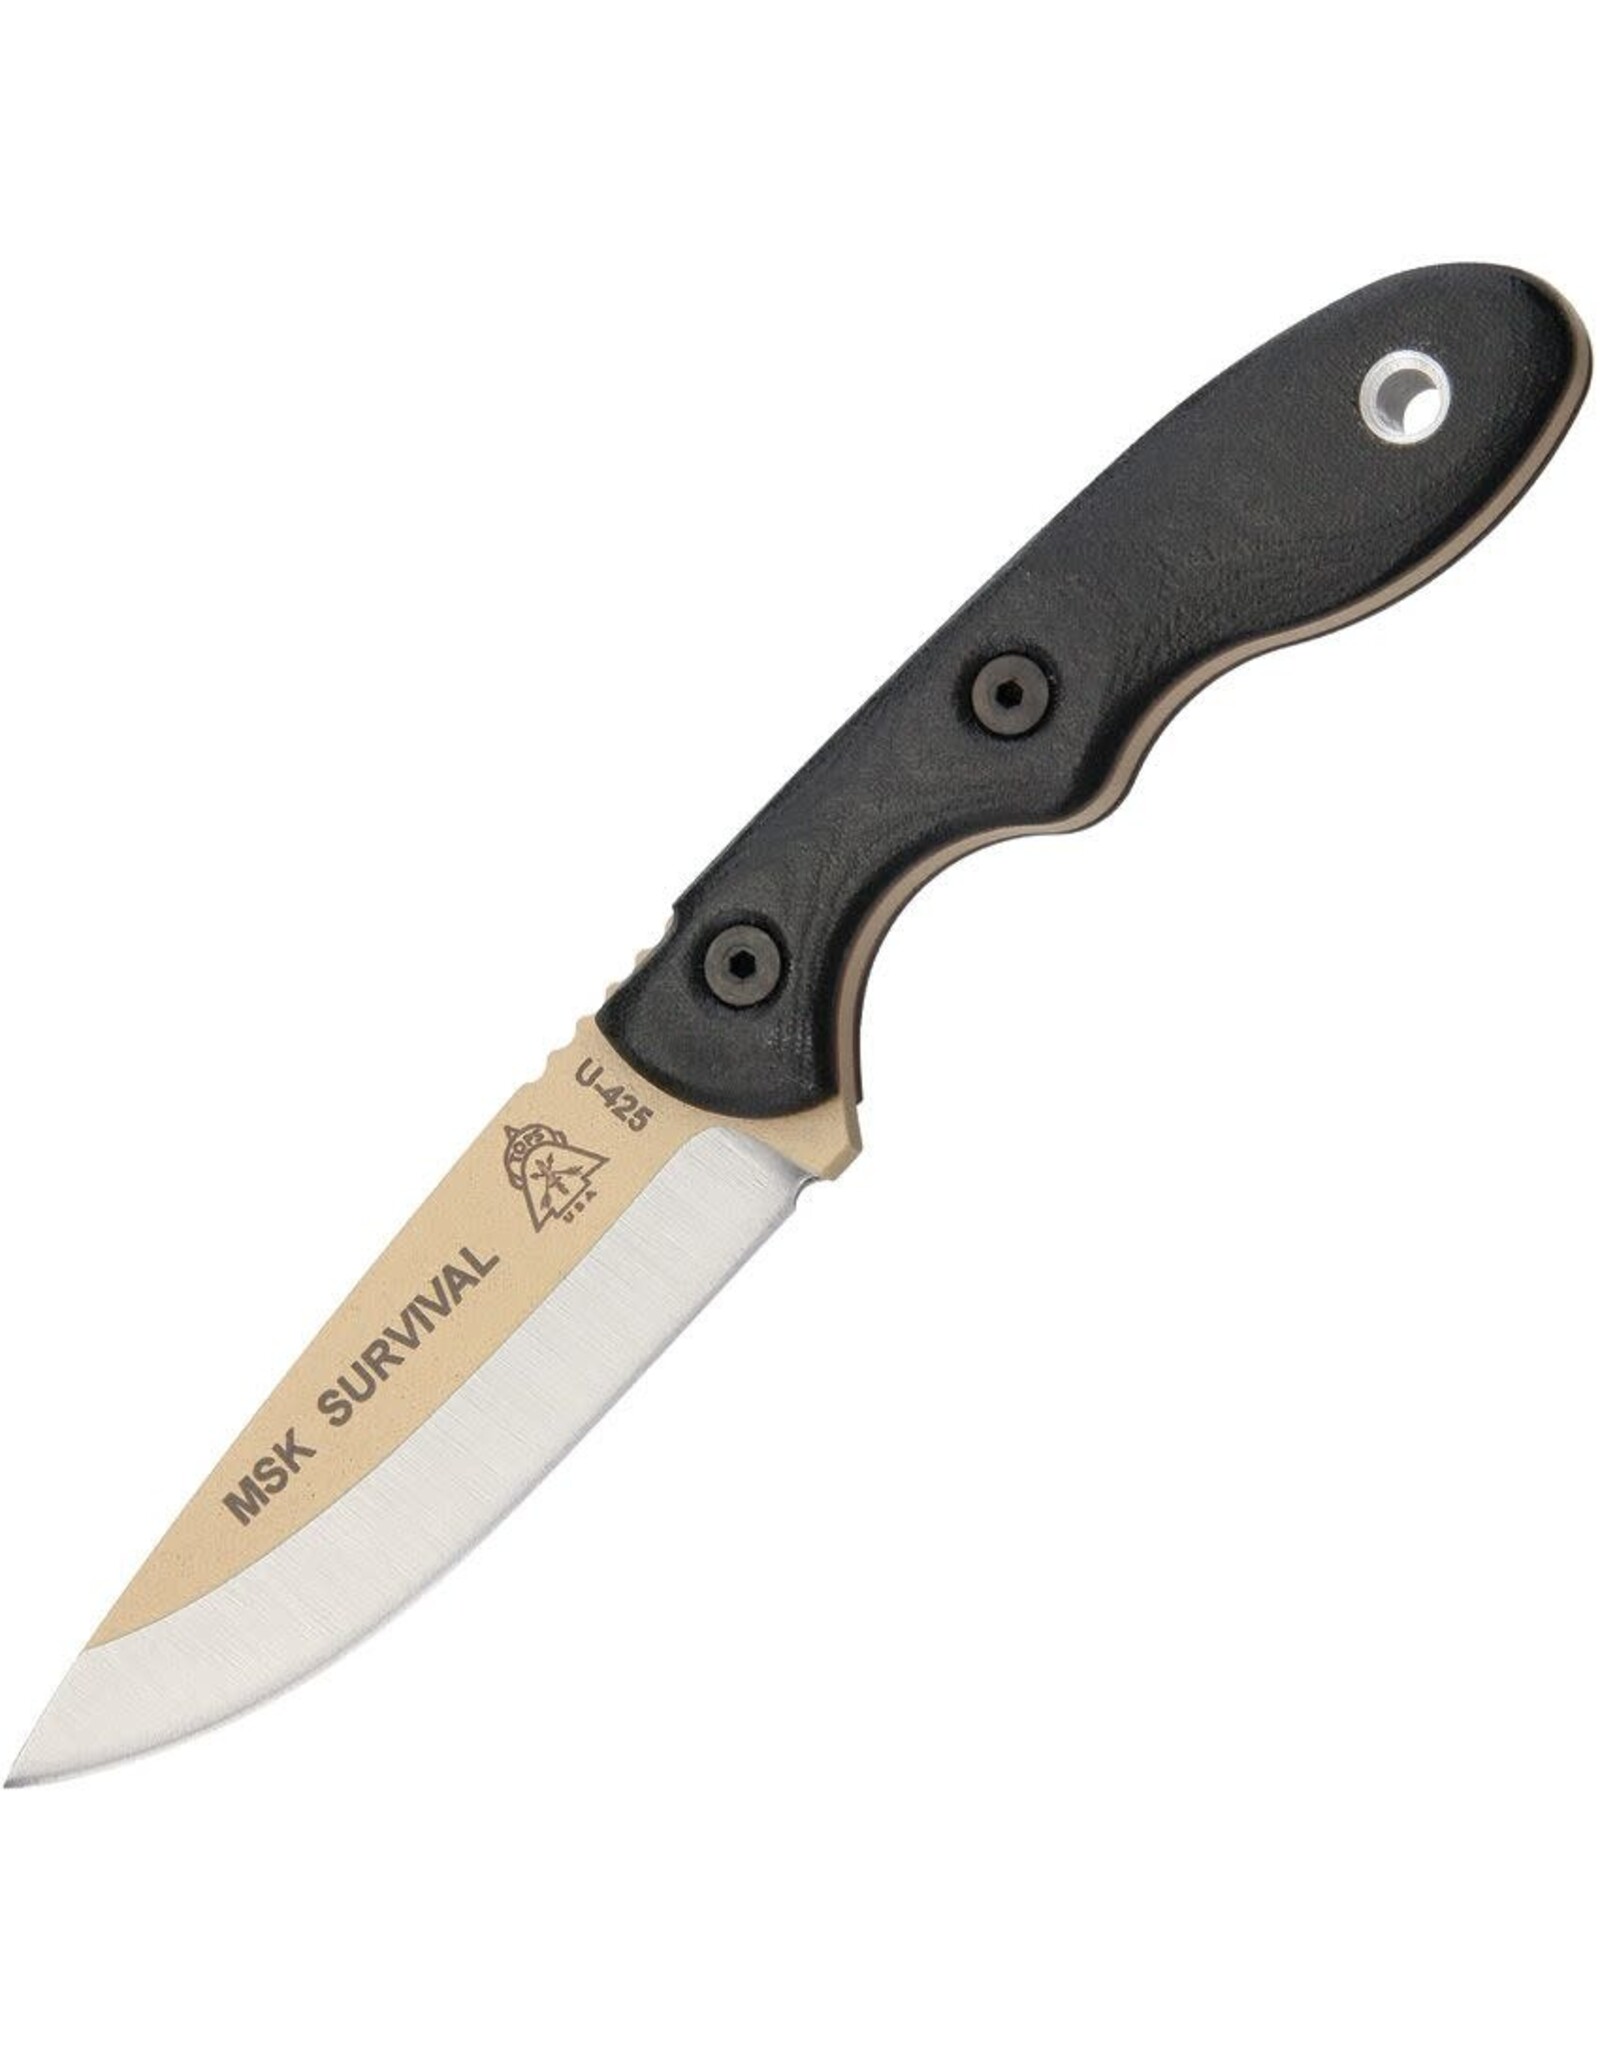 Tops TOPS Knives Mini Scandi Knife Fixed 3" 1095 Coyote Tan Blade, Black Micarta Handles, Kydex Sheath - MSK-SURV